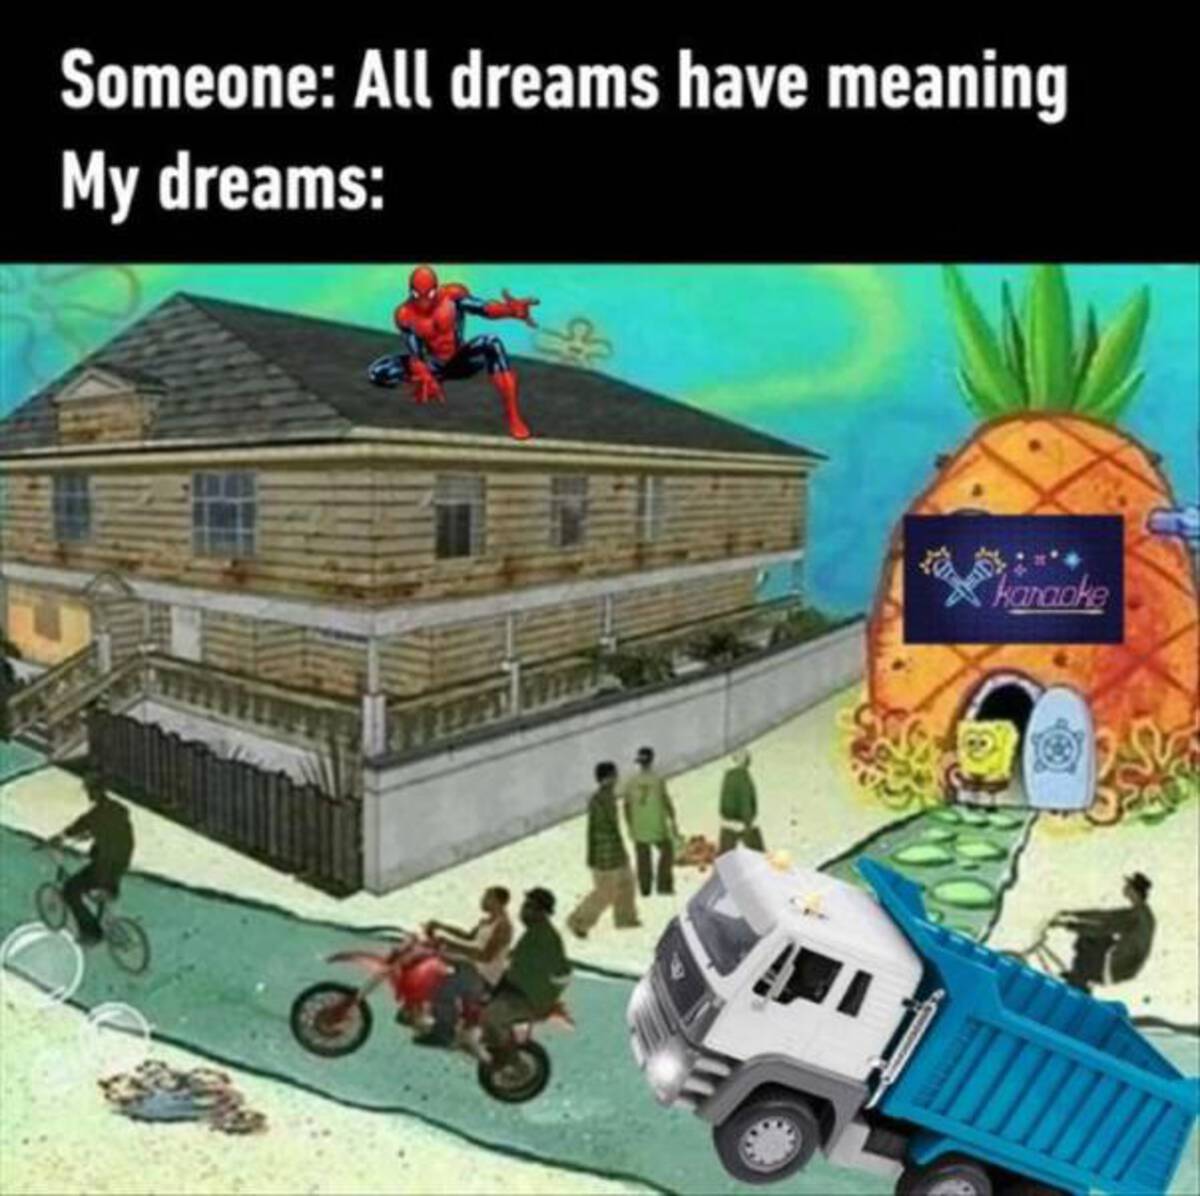 dreaming memes - Someone All dreams have meaning My dreams karaoke Sa